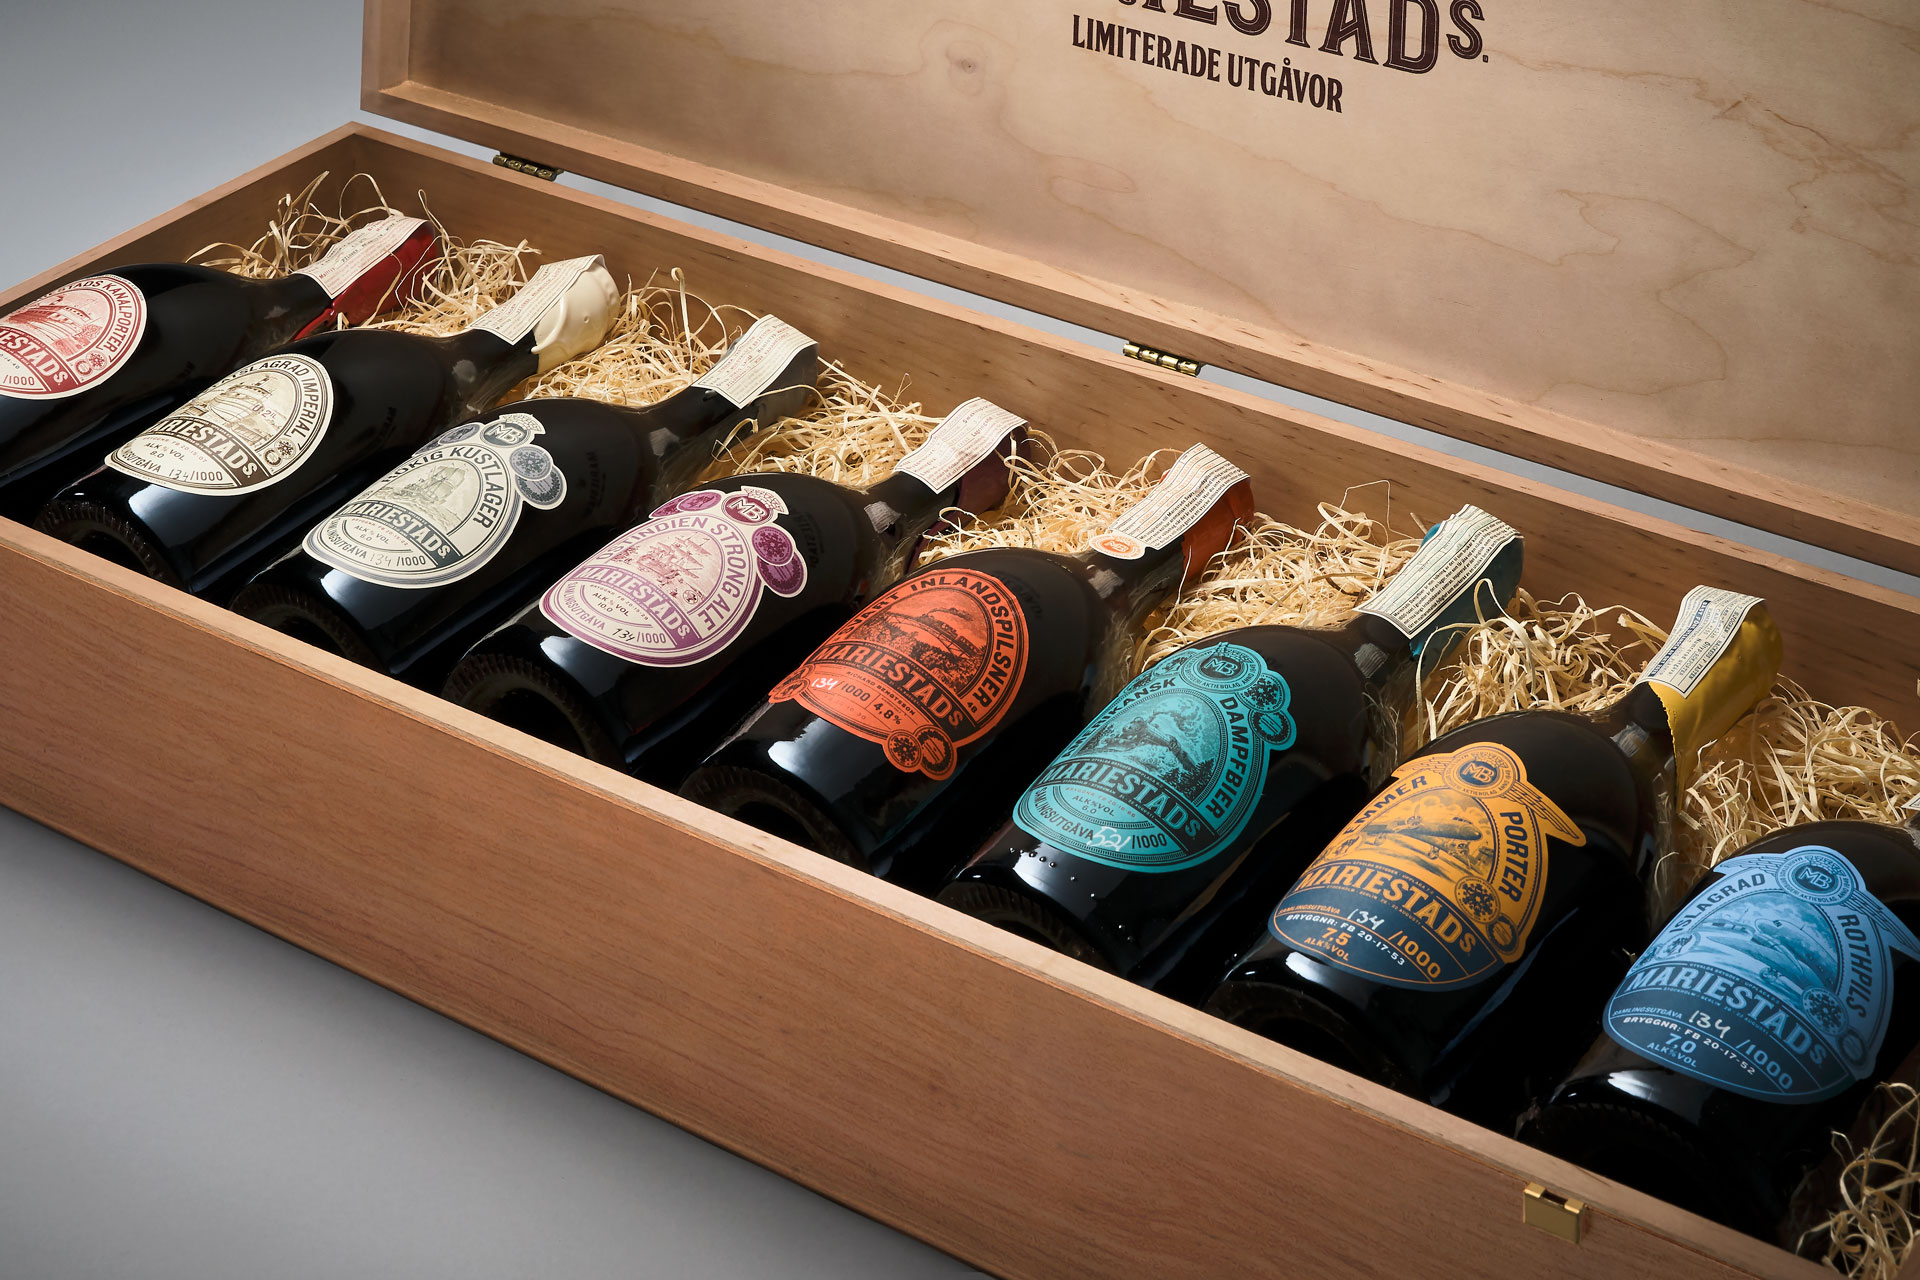 neumeister brand packaging design mariestads bottles box